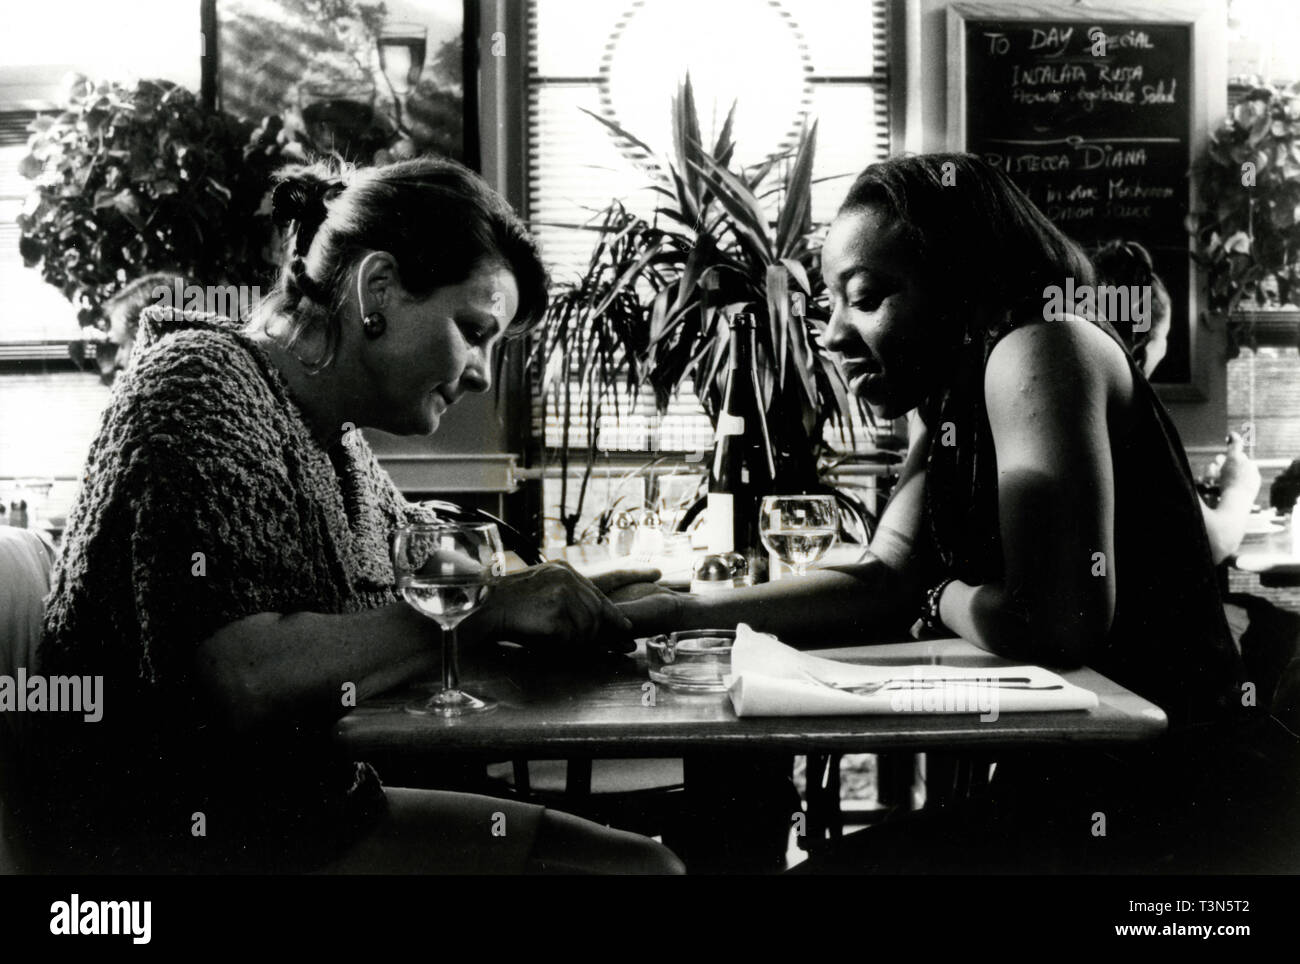 Actrices Brenda Blethyn et Marianne Jean-Baptiste dans le film Secrets et Mensonges, 1996 Banque D'Images